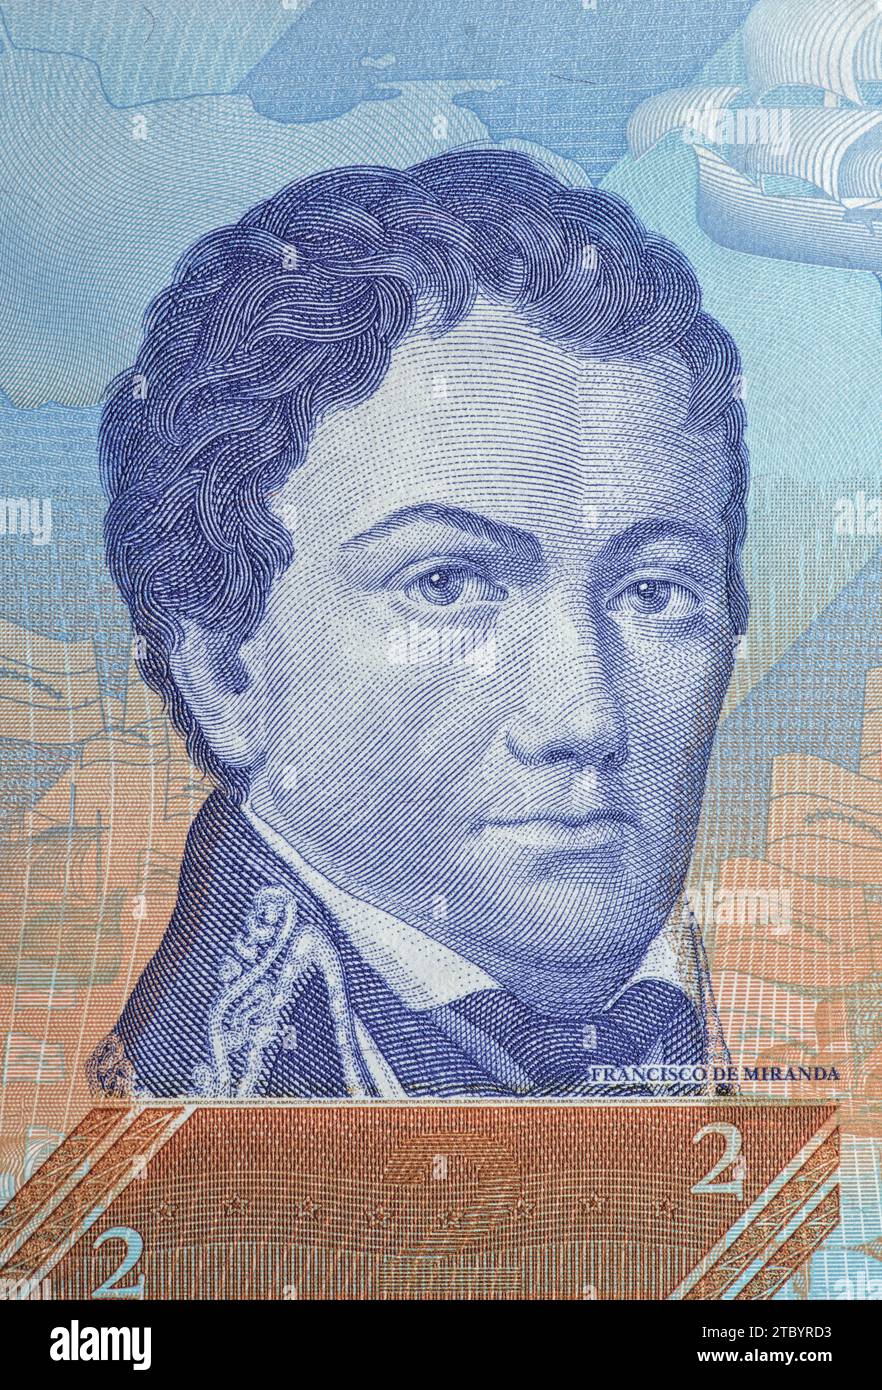 Image of Francisco de Miranda on the banknote of 2 Venezuelan bolivars. Stock Photo